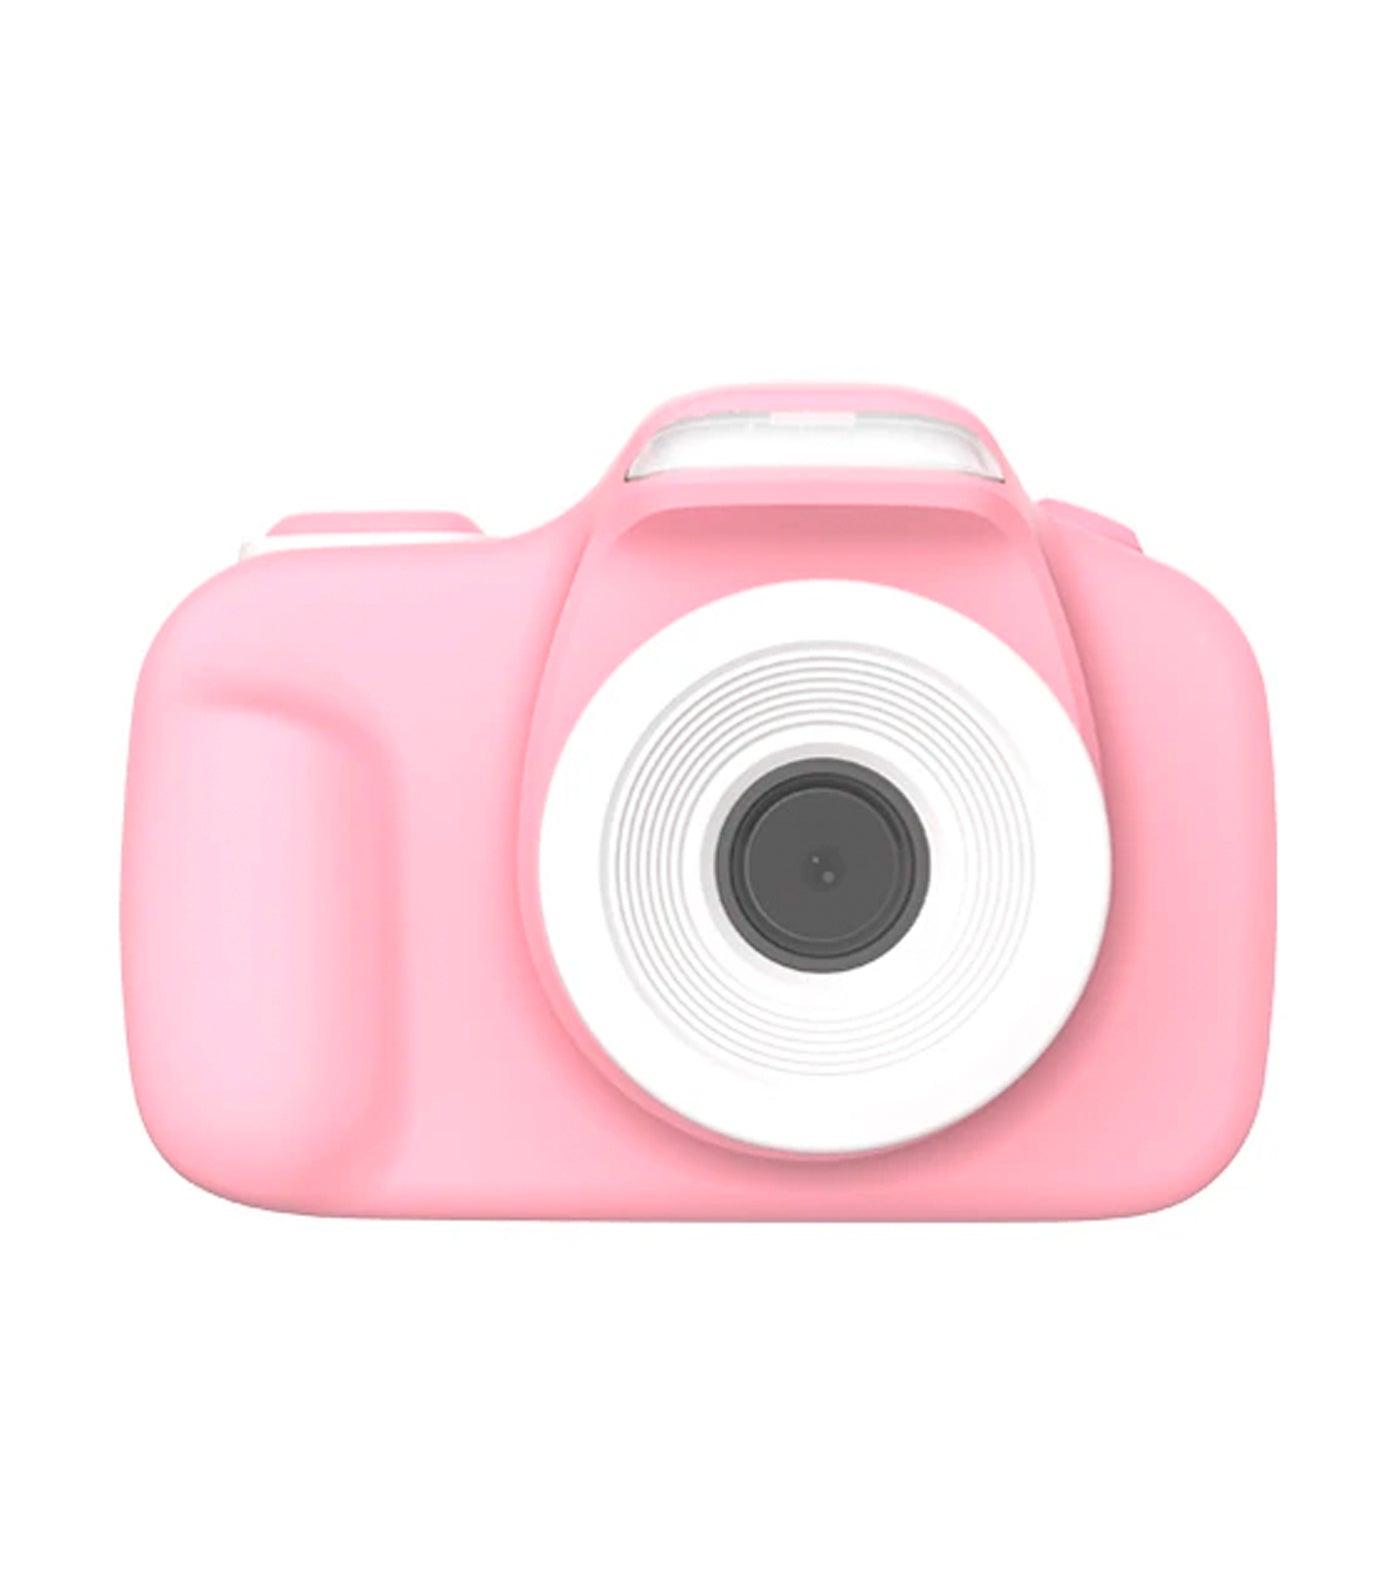 myfirst pink camera 3 dual lens 